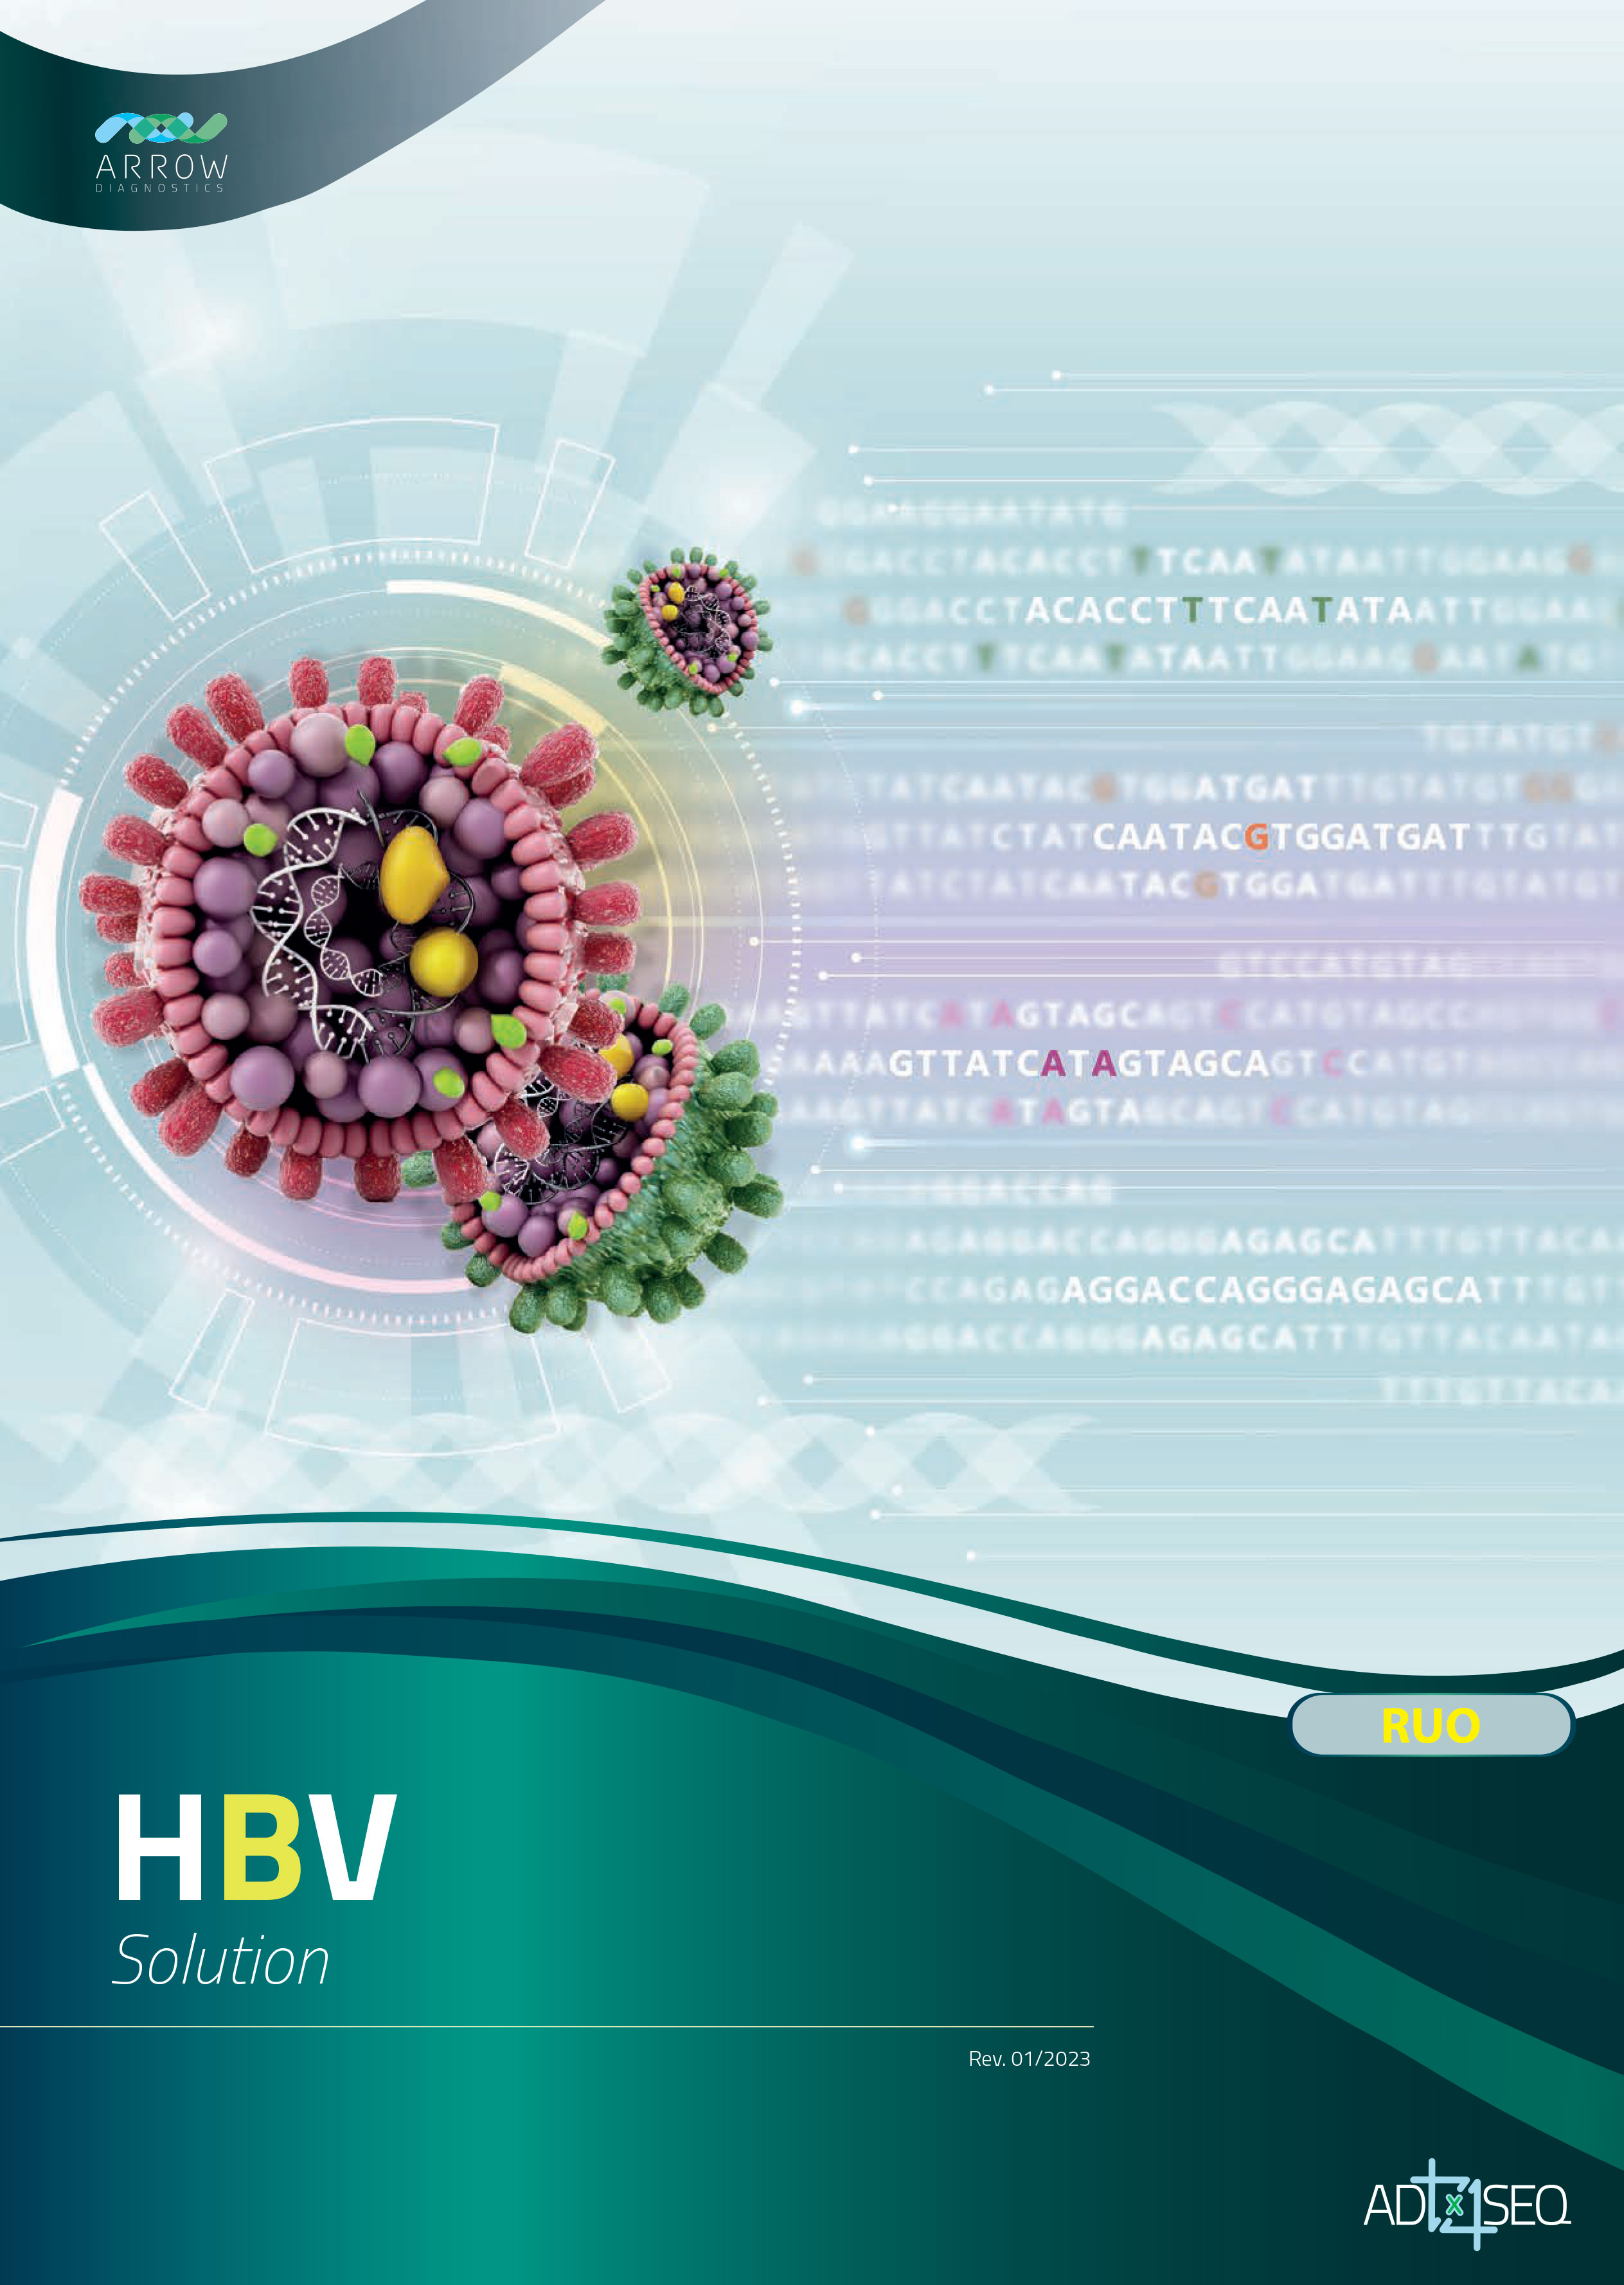 HBV Solution